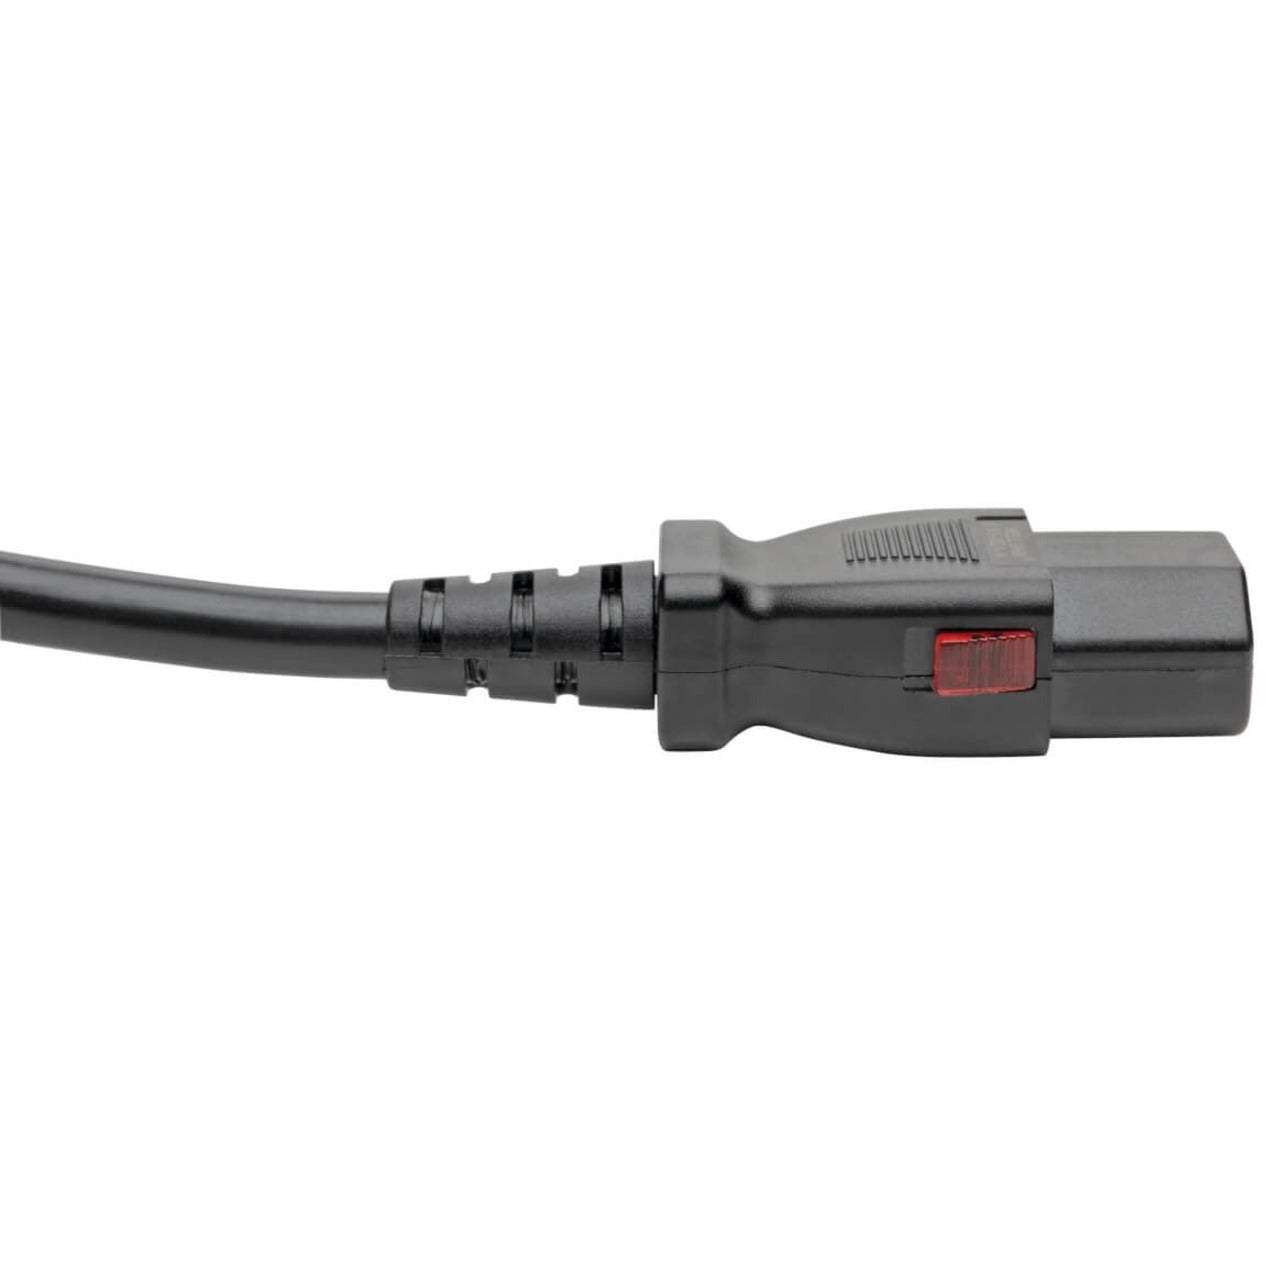 Tripp Lite P004-L06 Power Extension Cord, 6 ft, Black, Lifetime Warranty